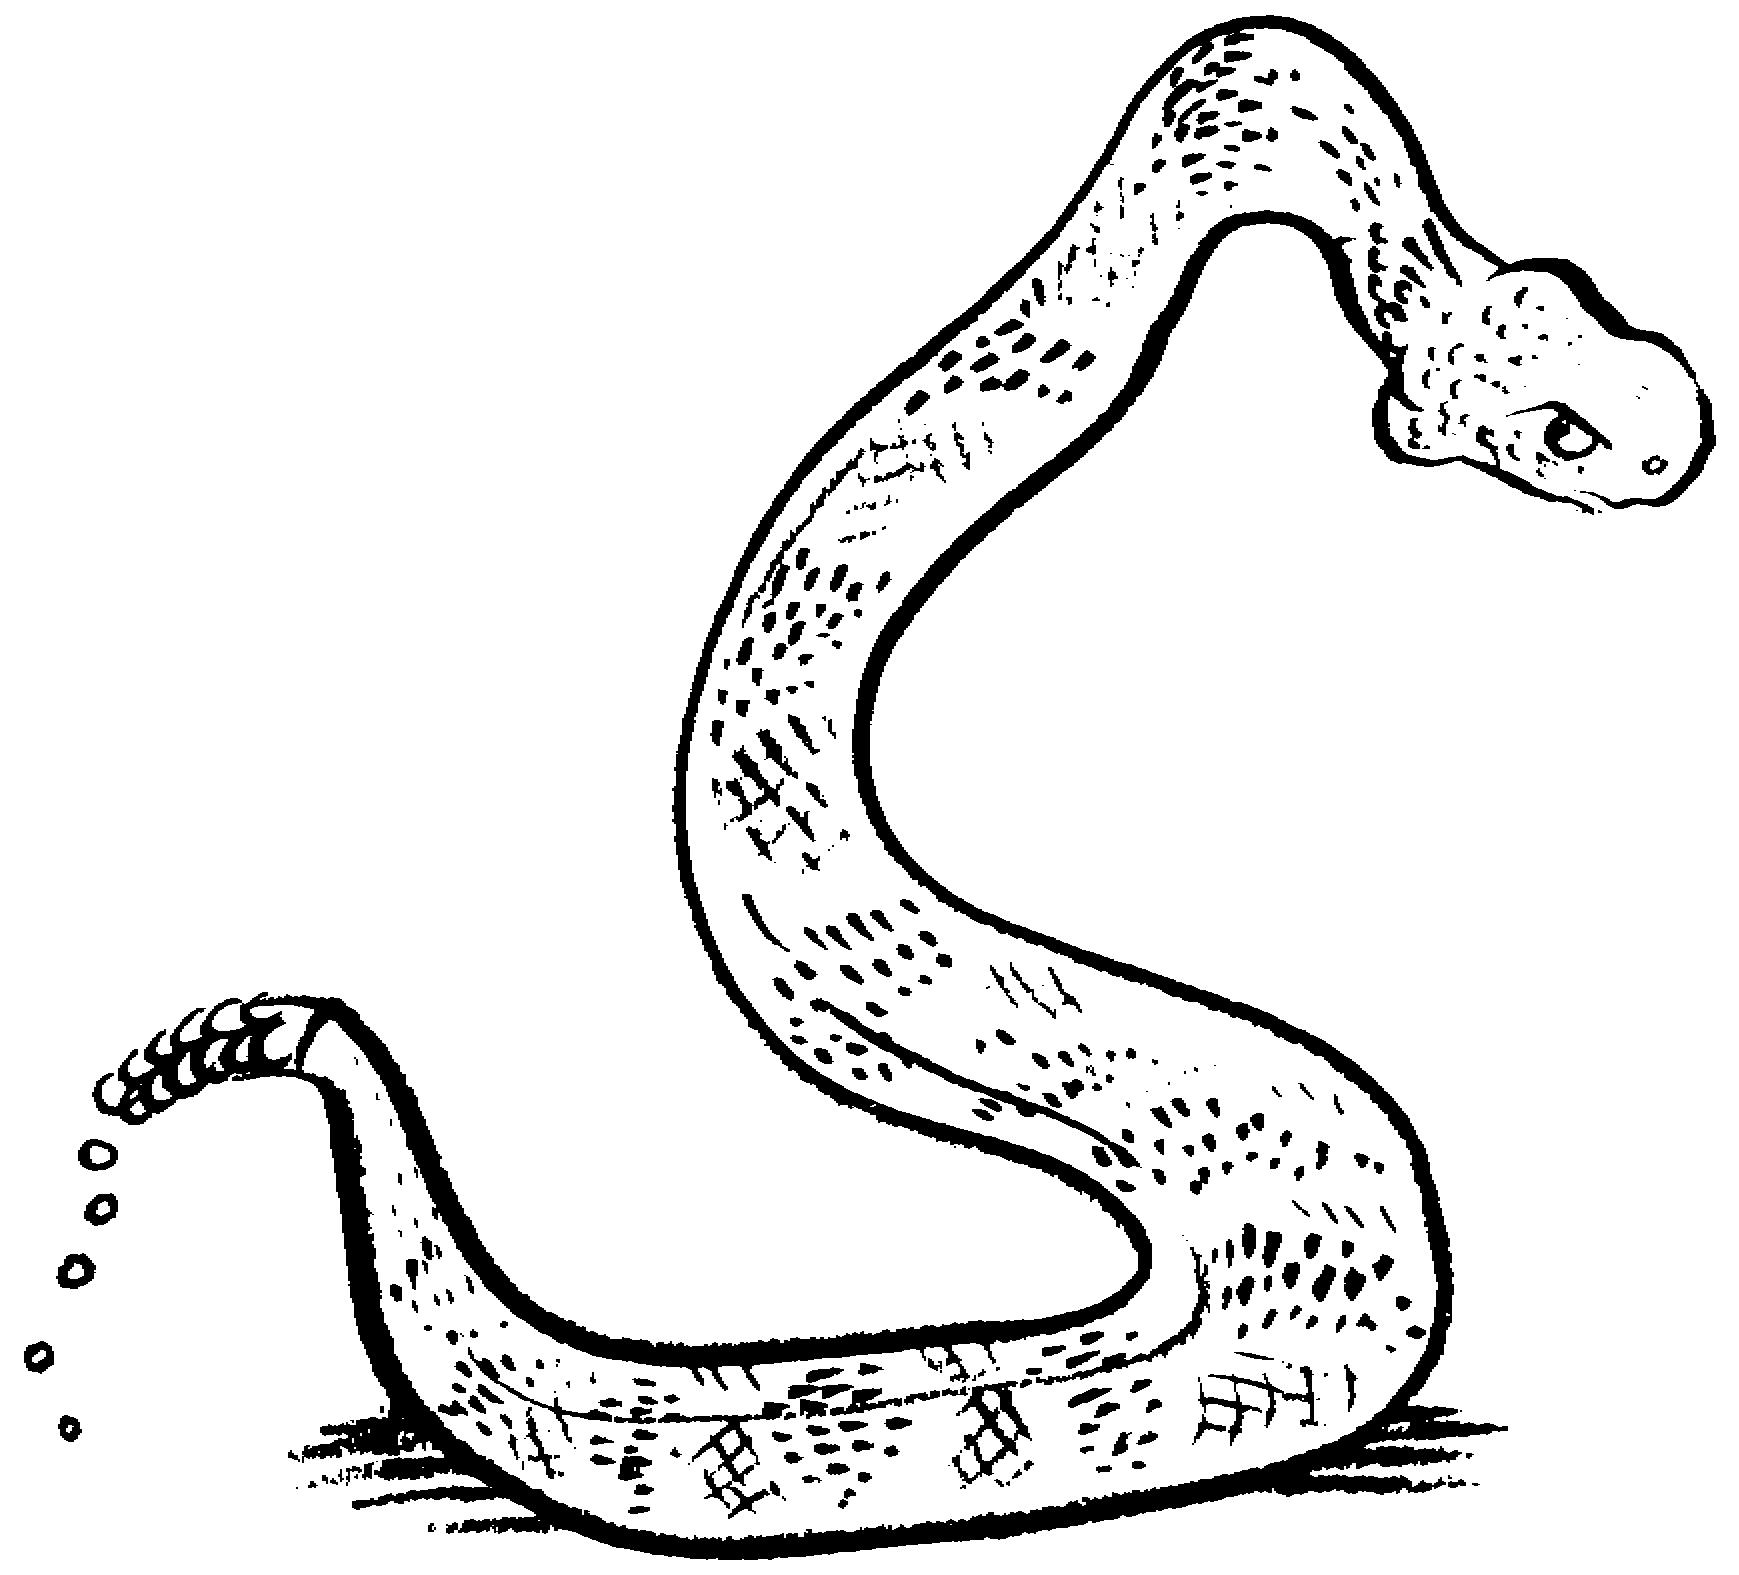 Snake Black And White Clipart